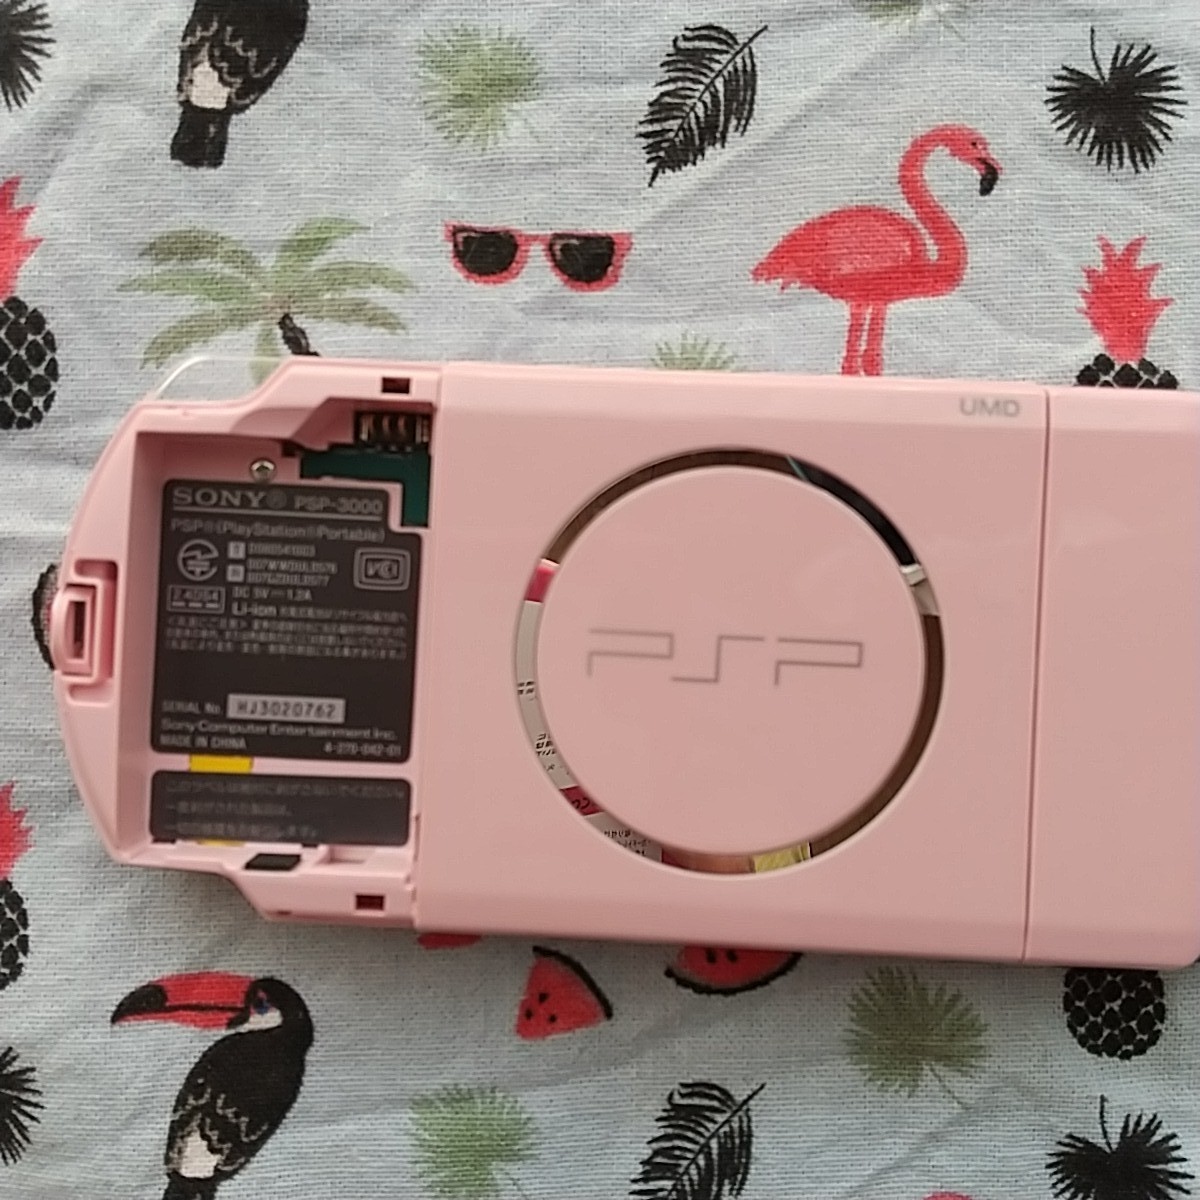 PSP3000/ブロッサムピンク/PSP本体/PSP/ SONY/プレイステーションポータブル3000/ピンク